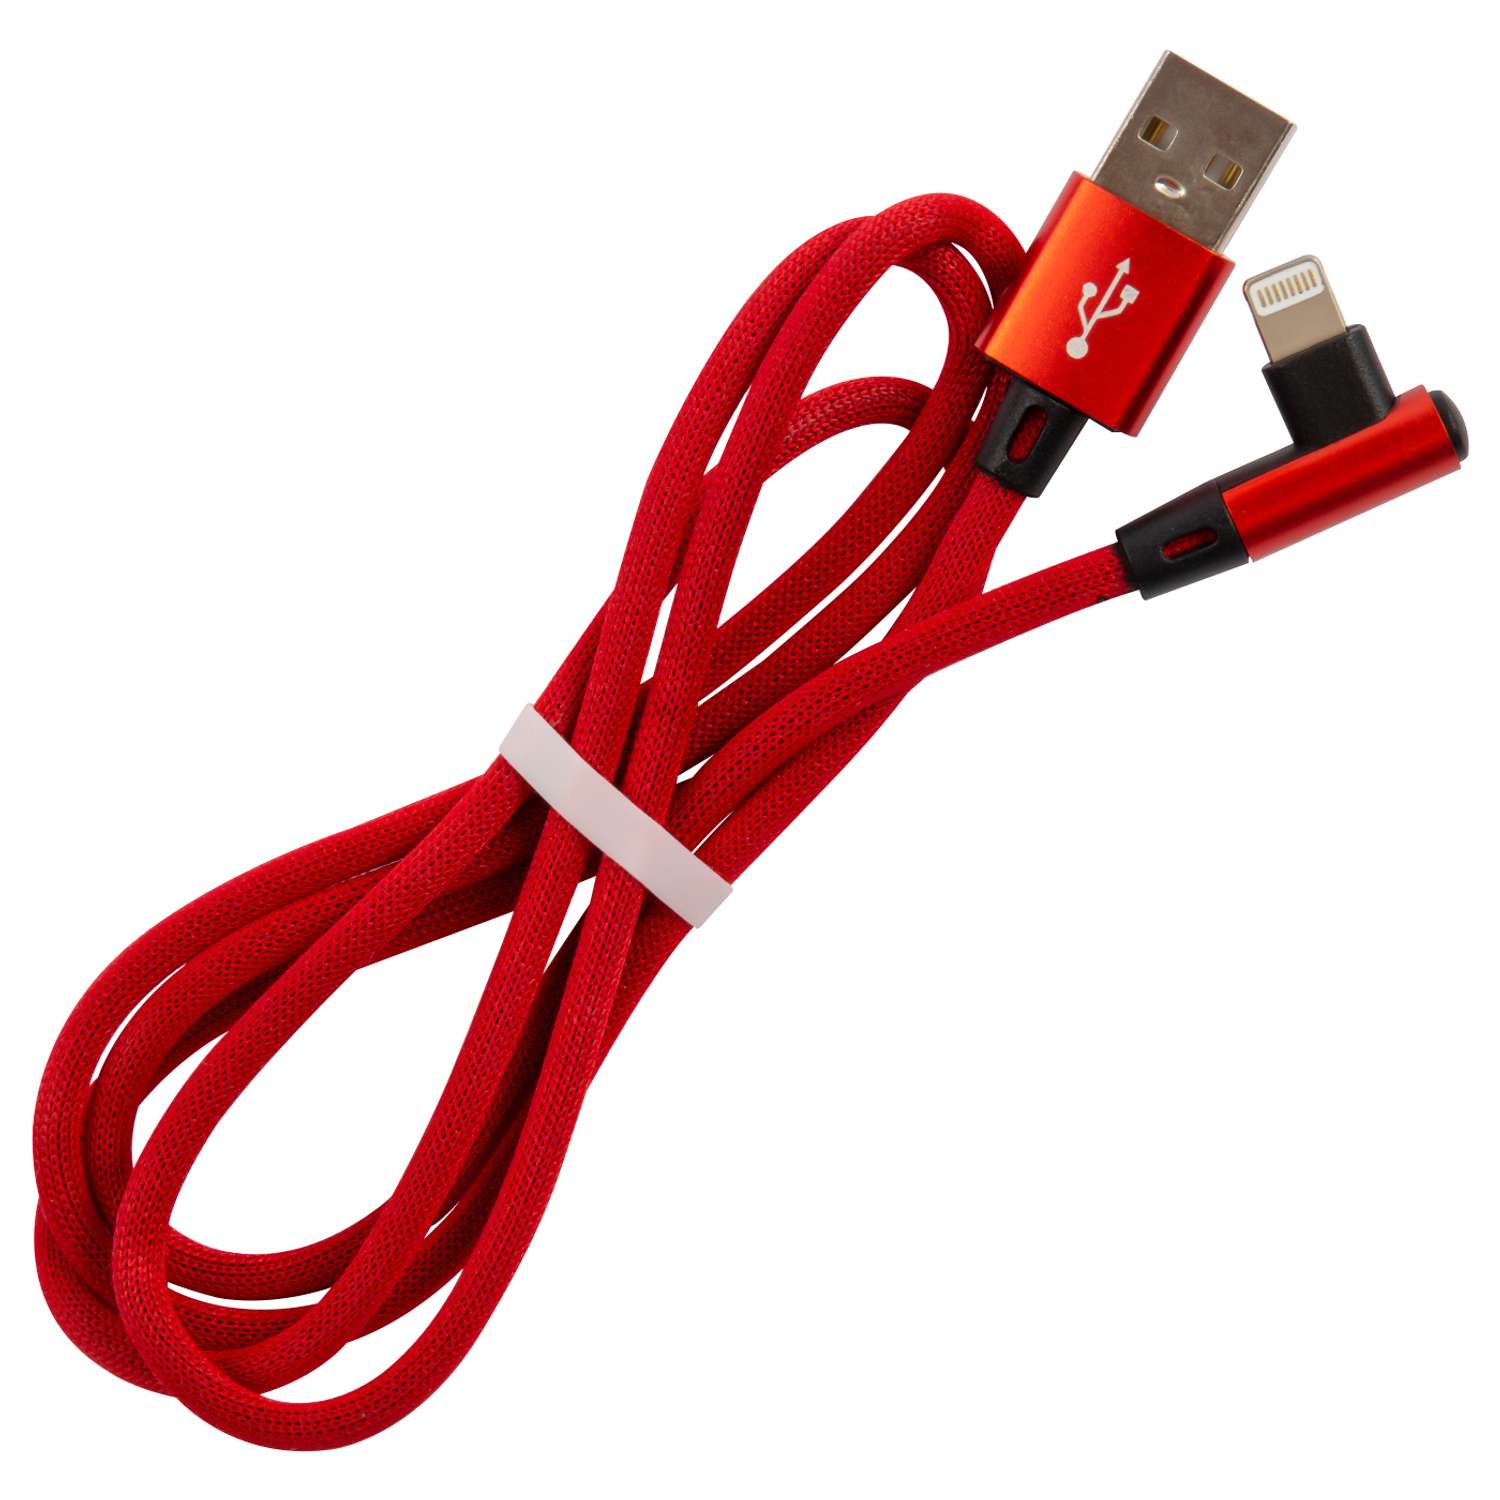 Кабель red line. Дата кабель Red line. Сетевой кабель Red line t3 ут000035522 упаковка. Smartfon Kompa krasni. Redline кабель USB 8 Pin PVX фото.